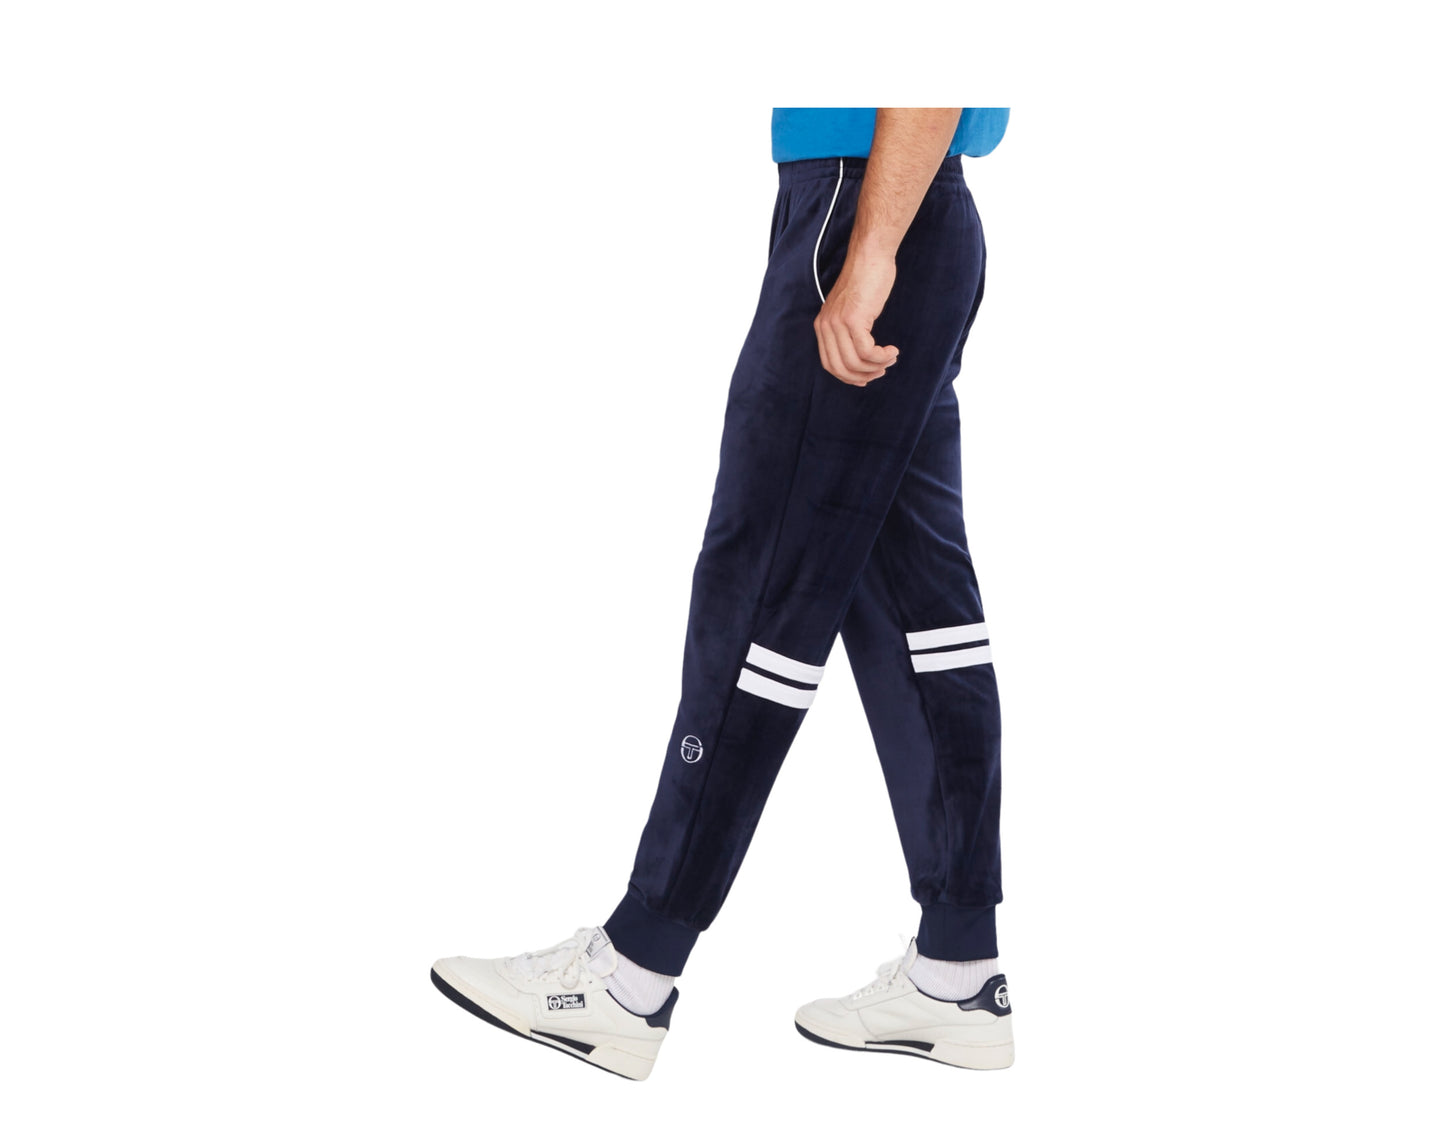 adidas Velour Track Pants - Blue, adidas US